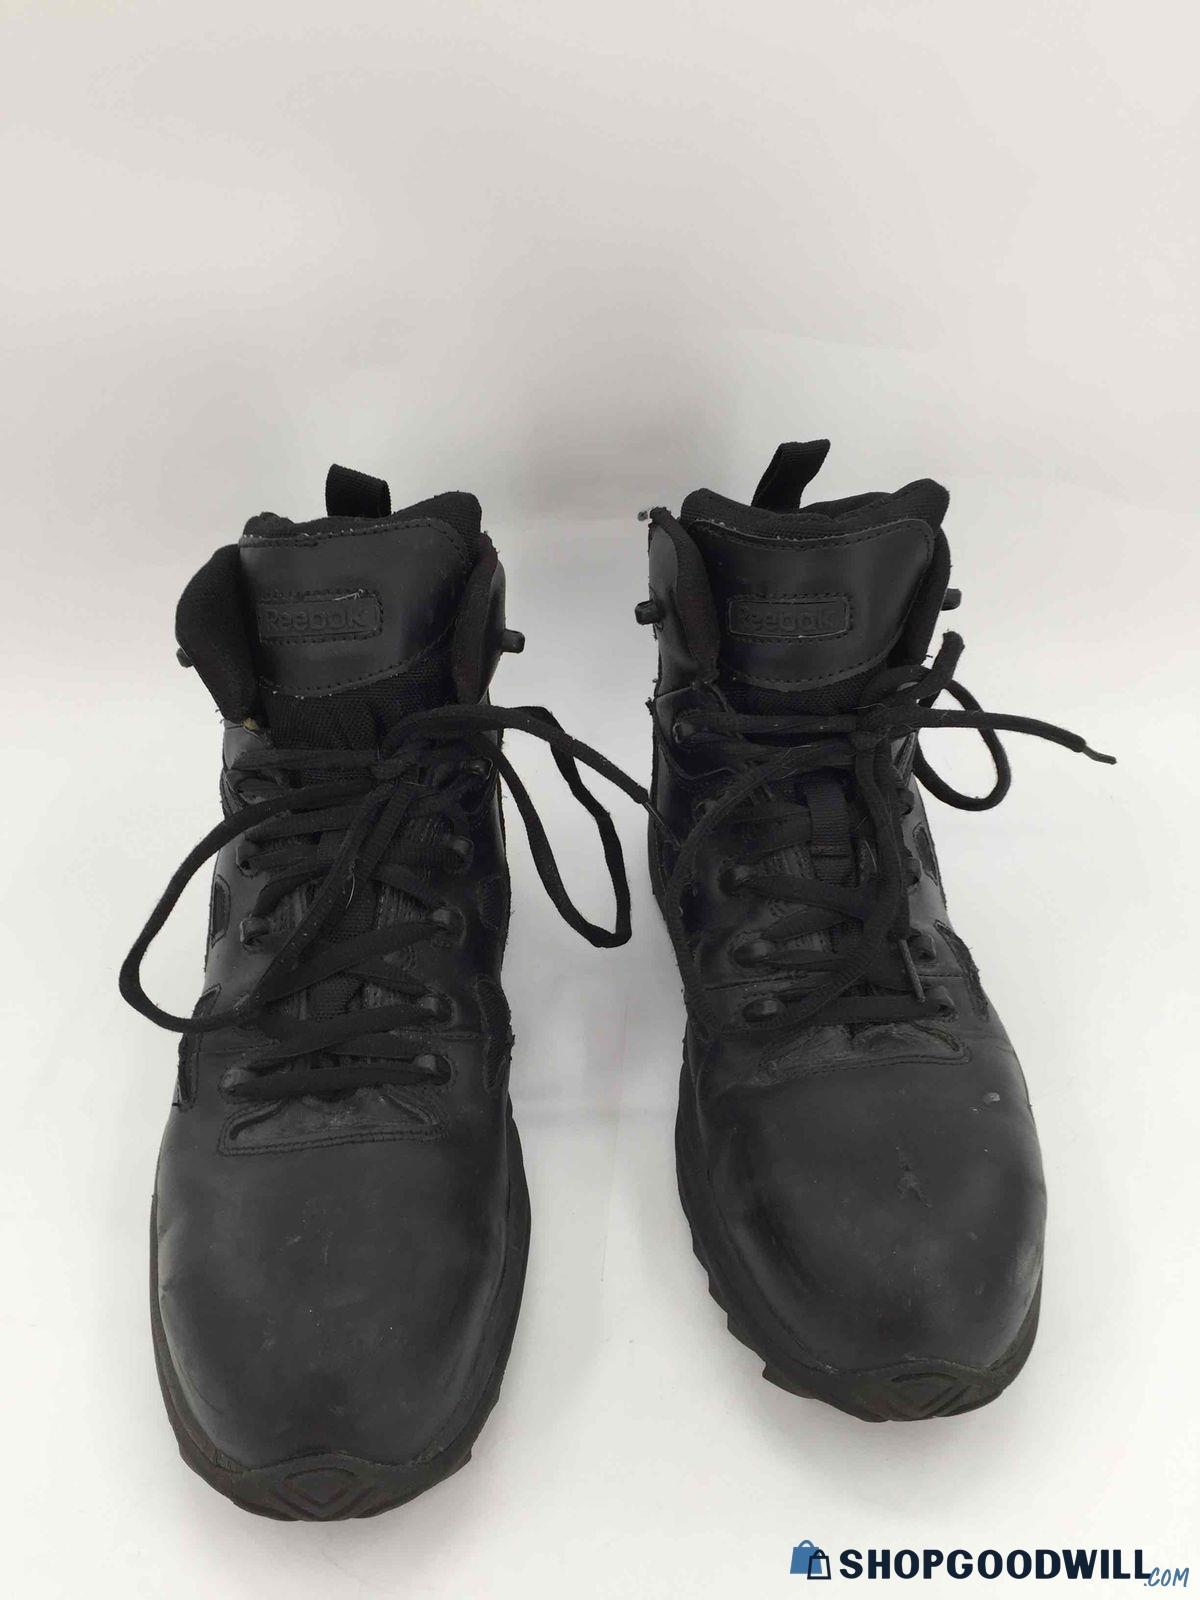 REEBOK Black Leather Hiking Boots - Size 10.5 - shopgoodwill.com